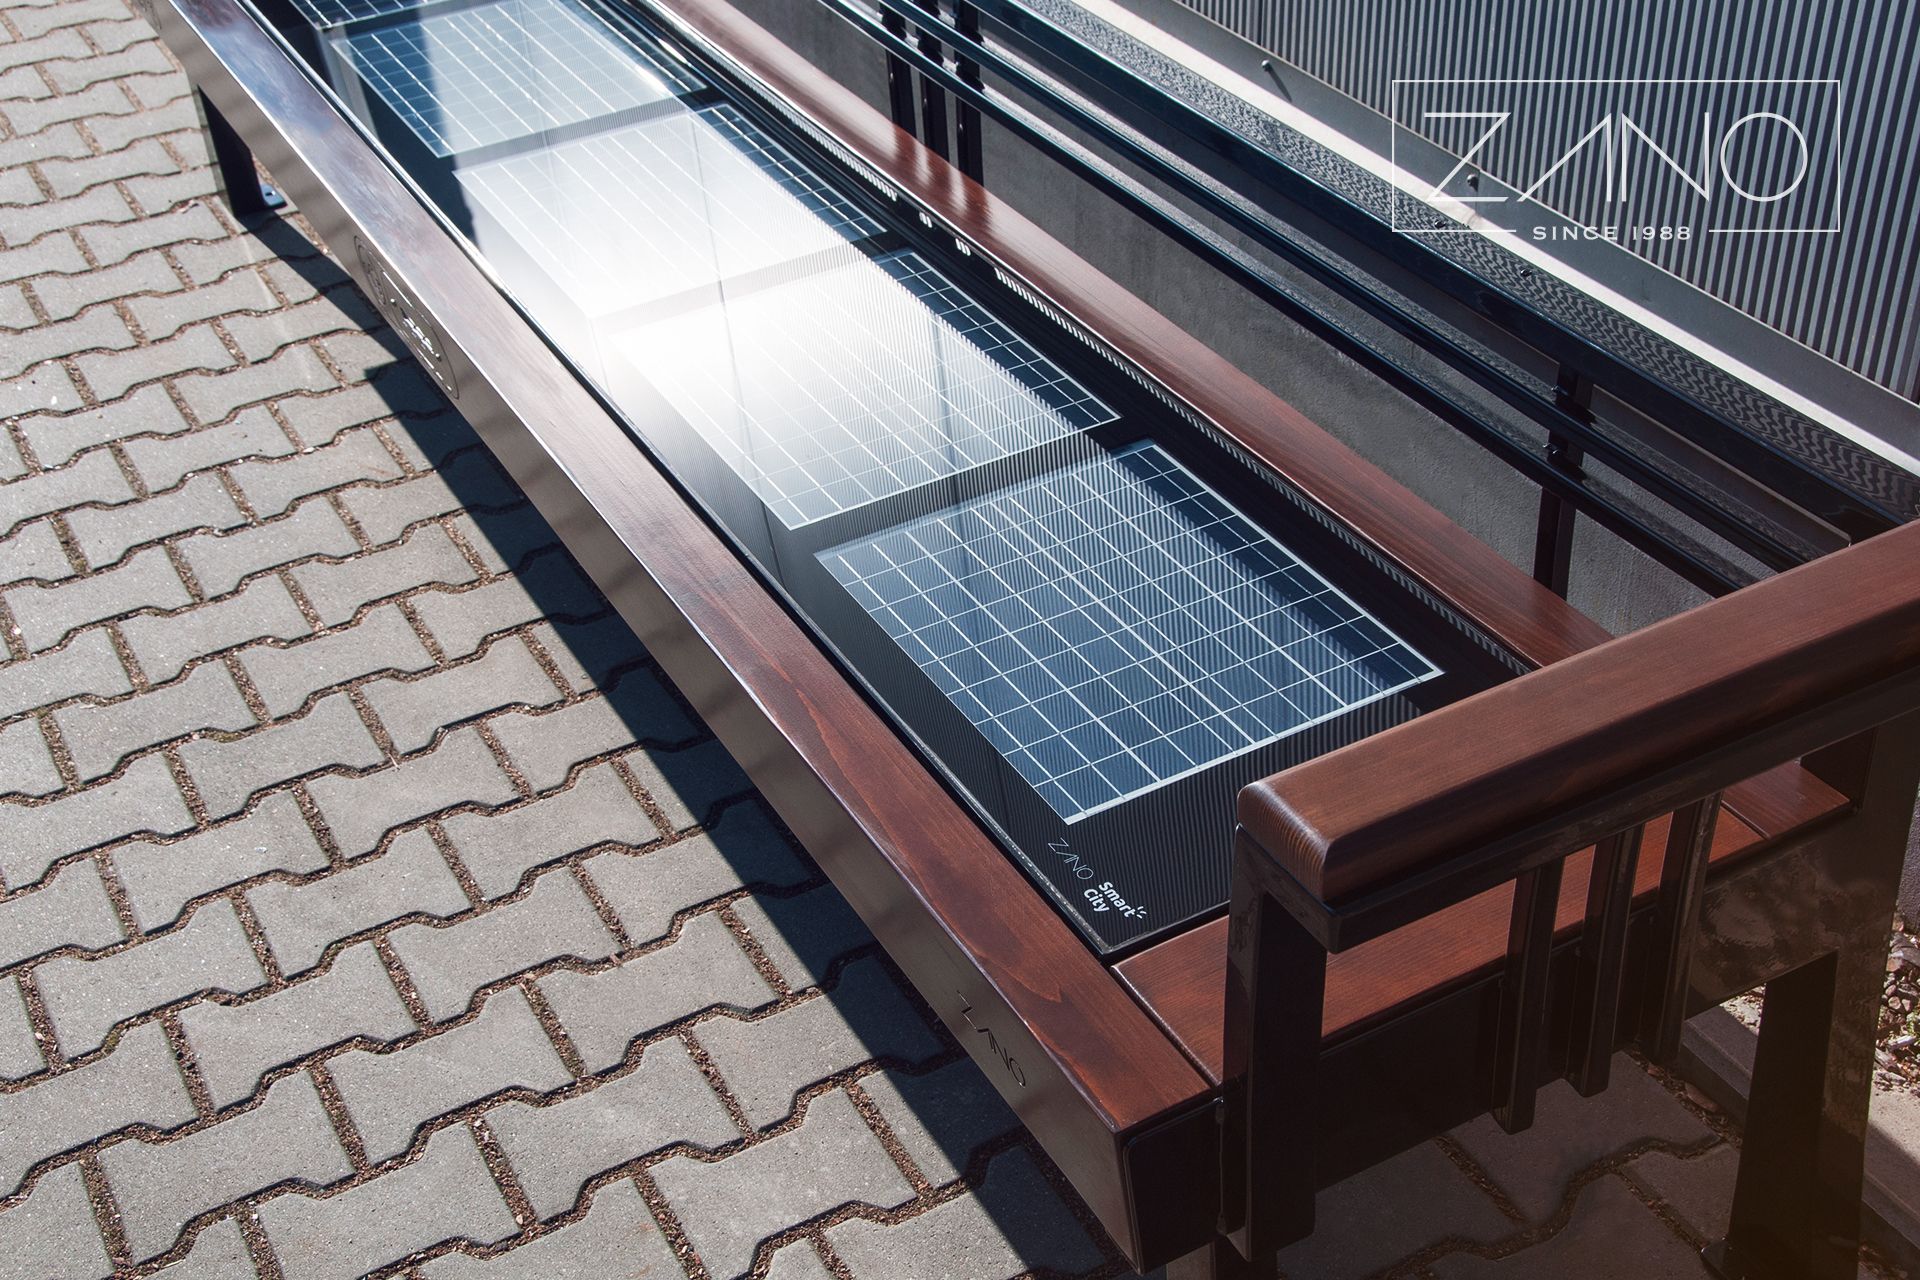 Sitzbank mit Solarpanels